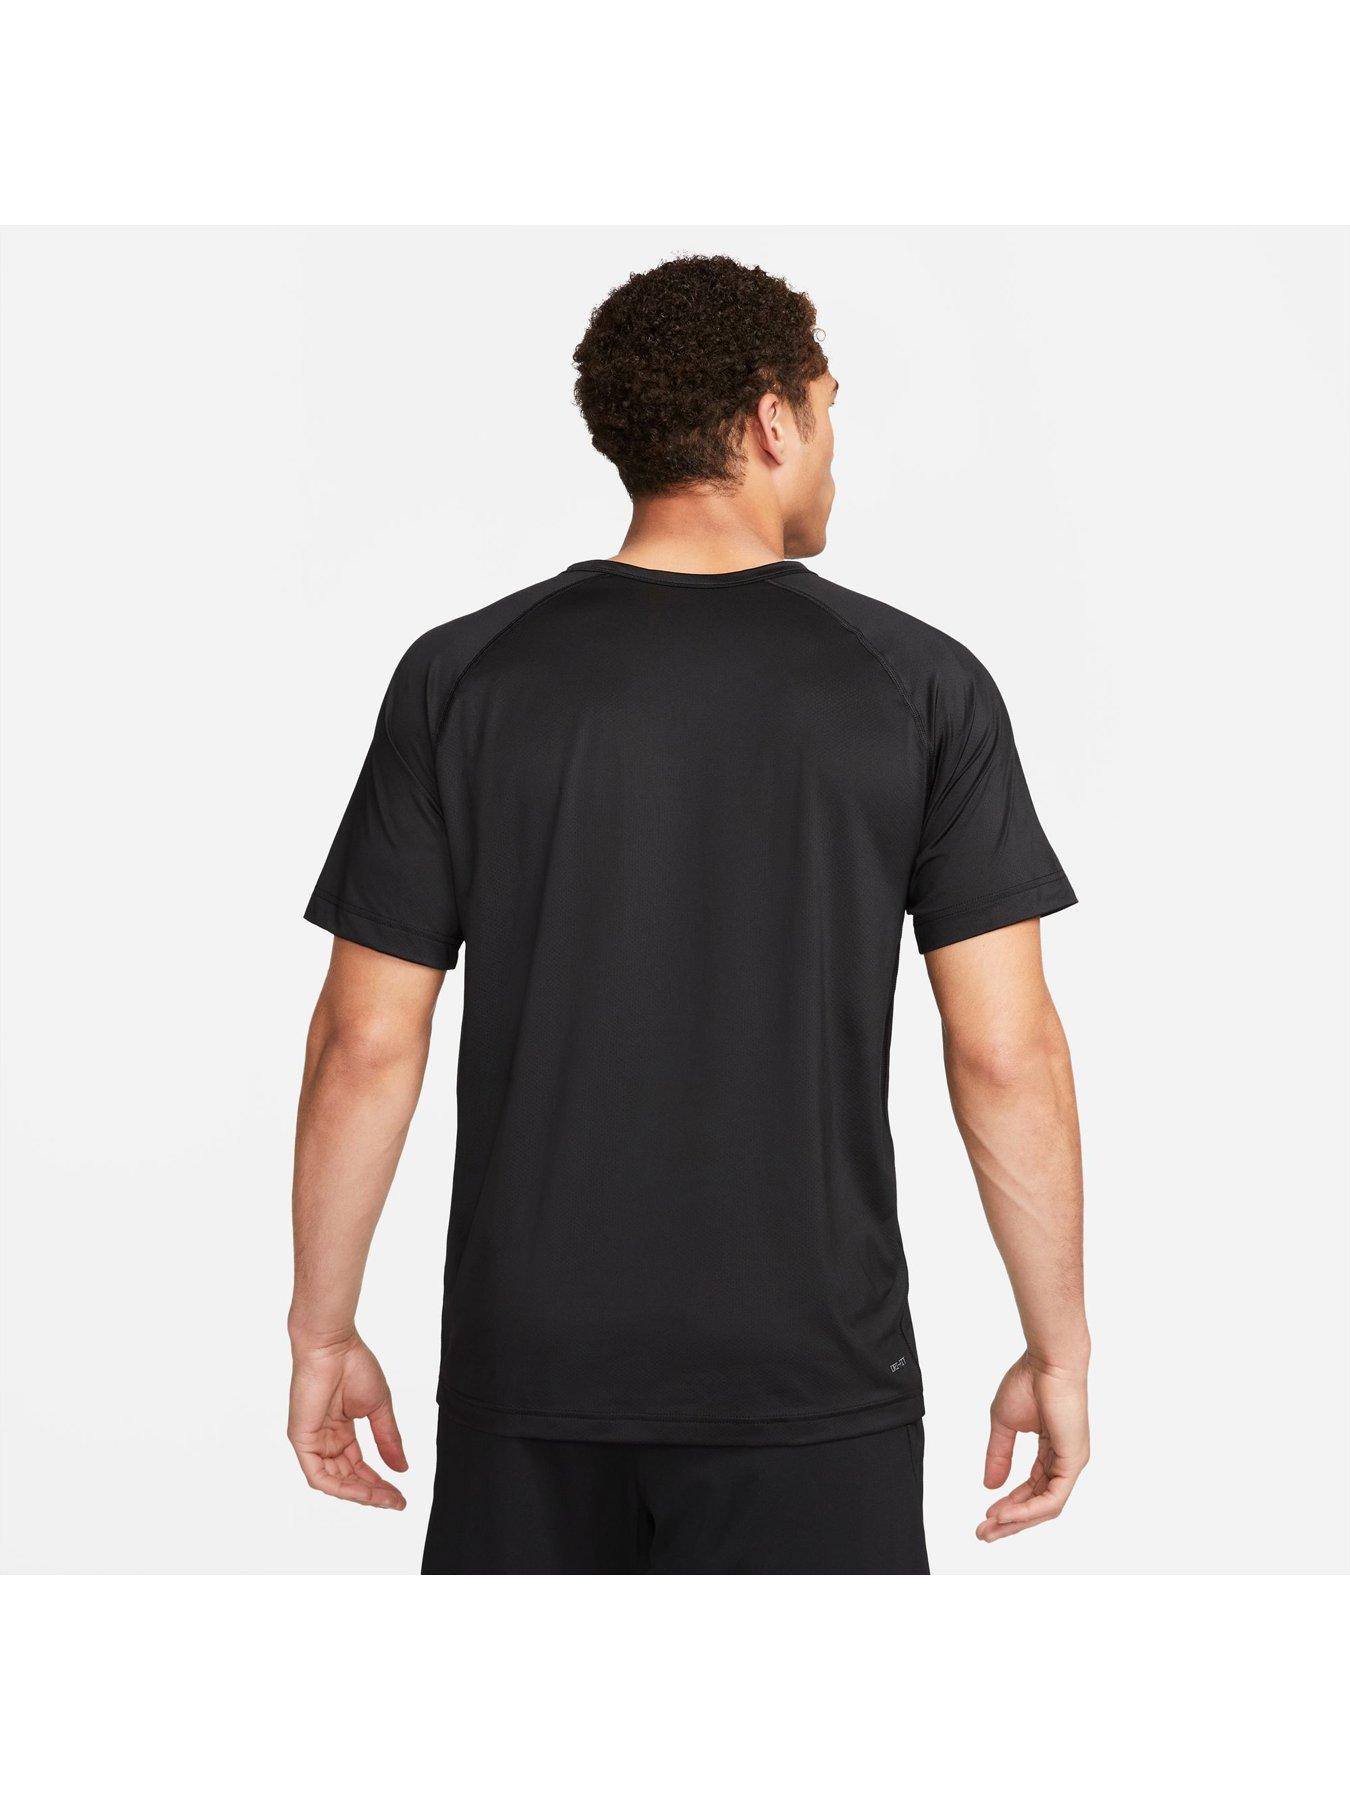 Nike Train Dri Fit Yoga T-shirt